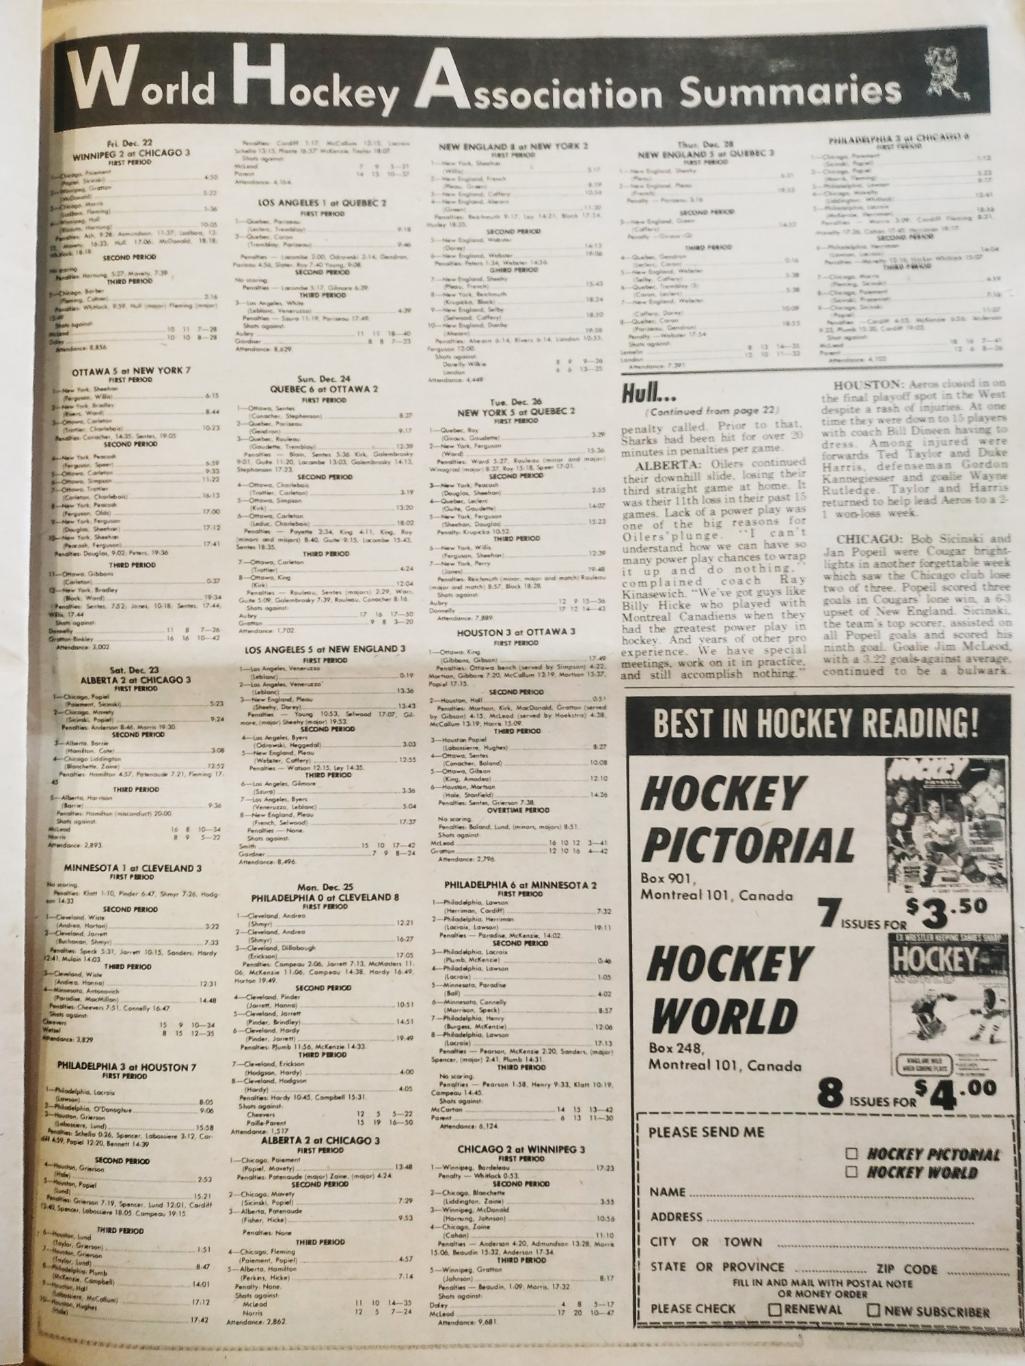 ХОККЕЙ ЖУРНАЛ ЕЖЕНЕДЕЛЬНИК НХЛ НОВОСТИ ХОККЕЯ JAN.12 1973 NHL THE HOCKEY NEWS 6